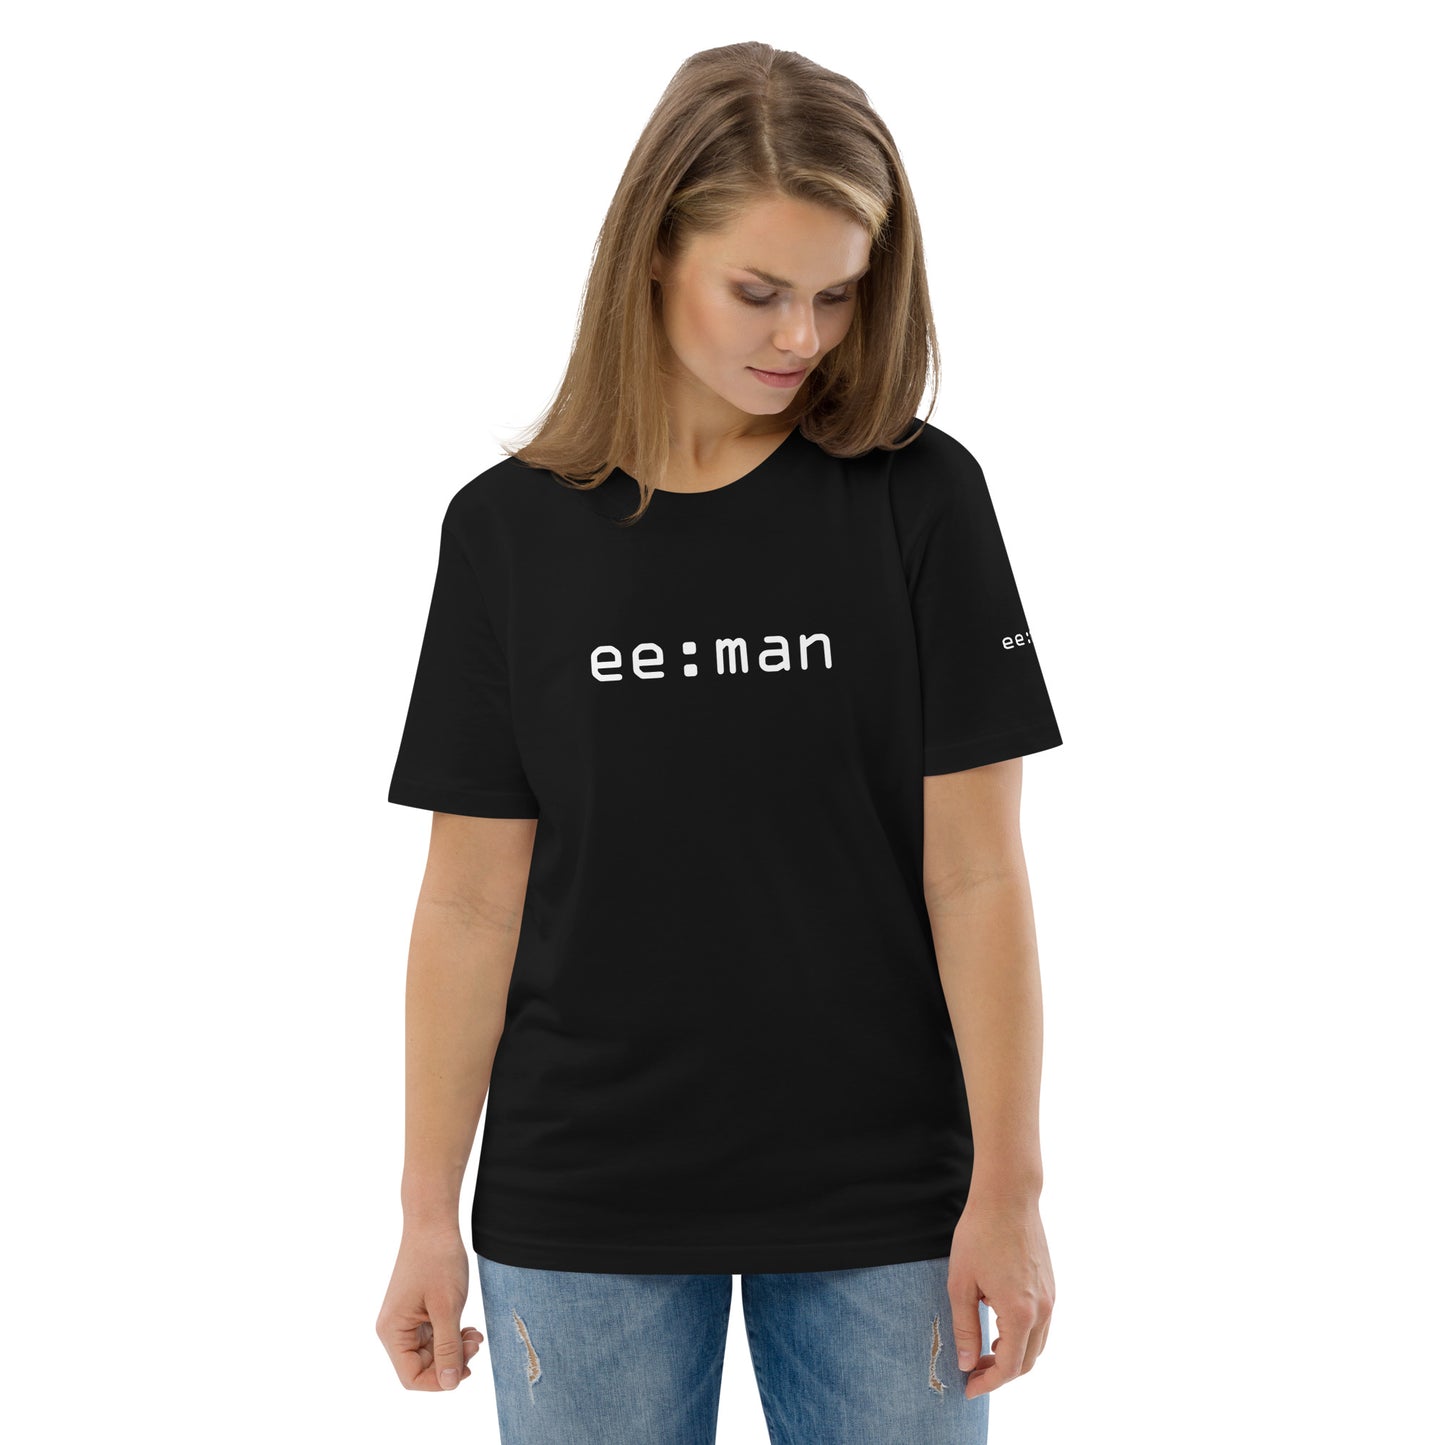 ee:man, official logo, Unisex organic cotton t-shirt